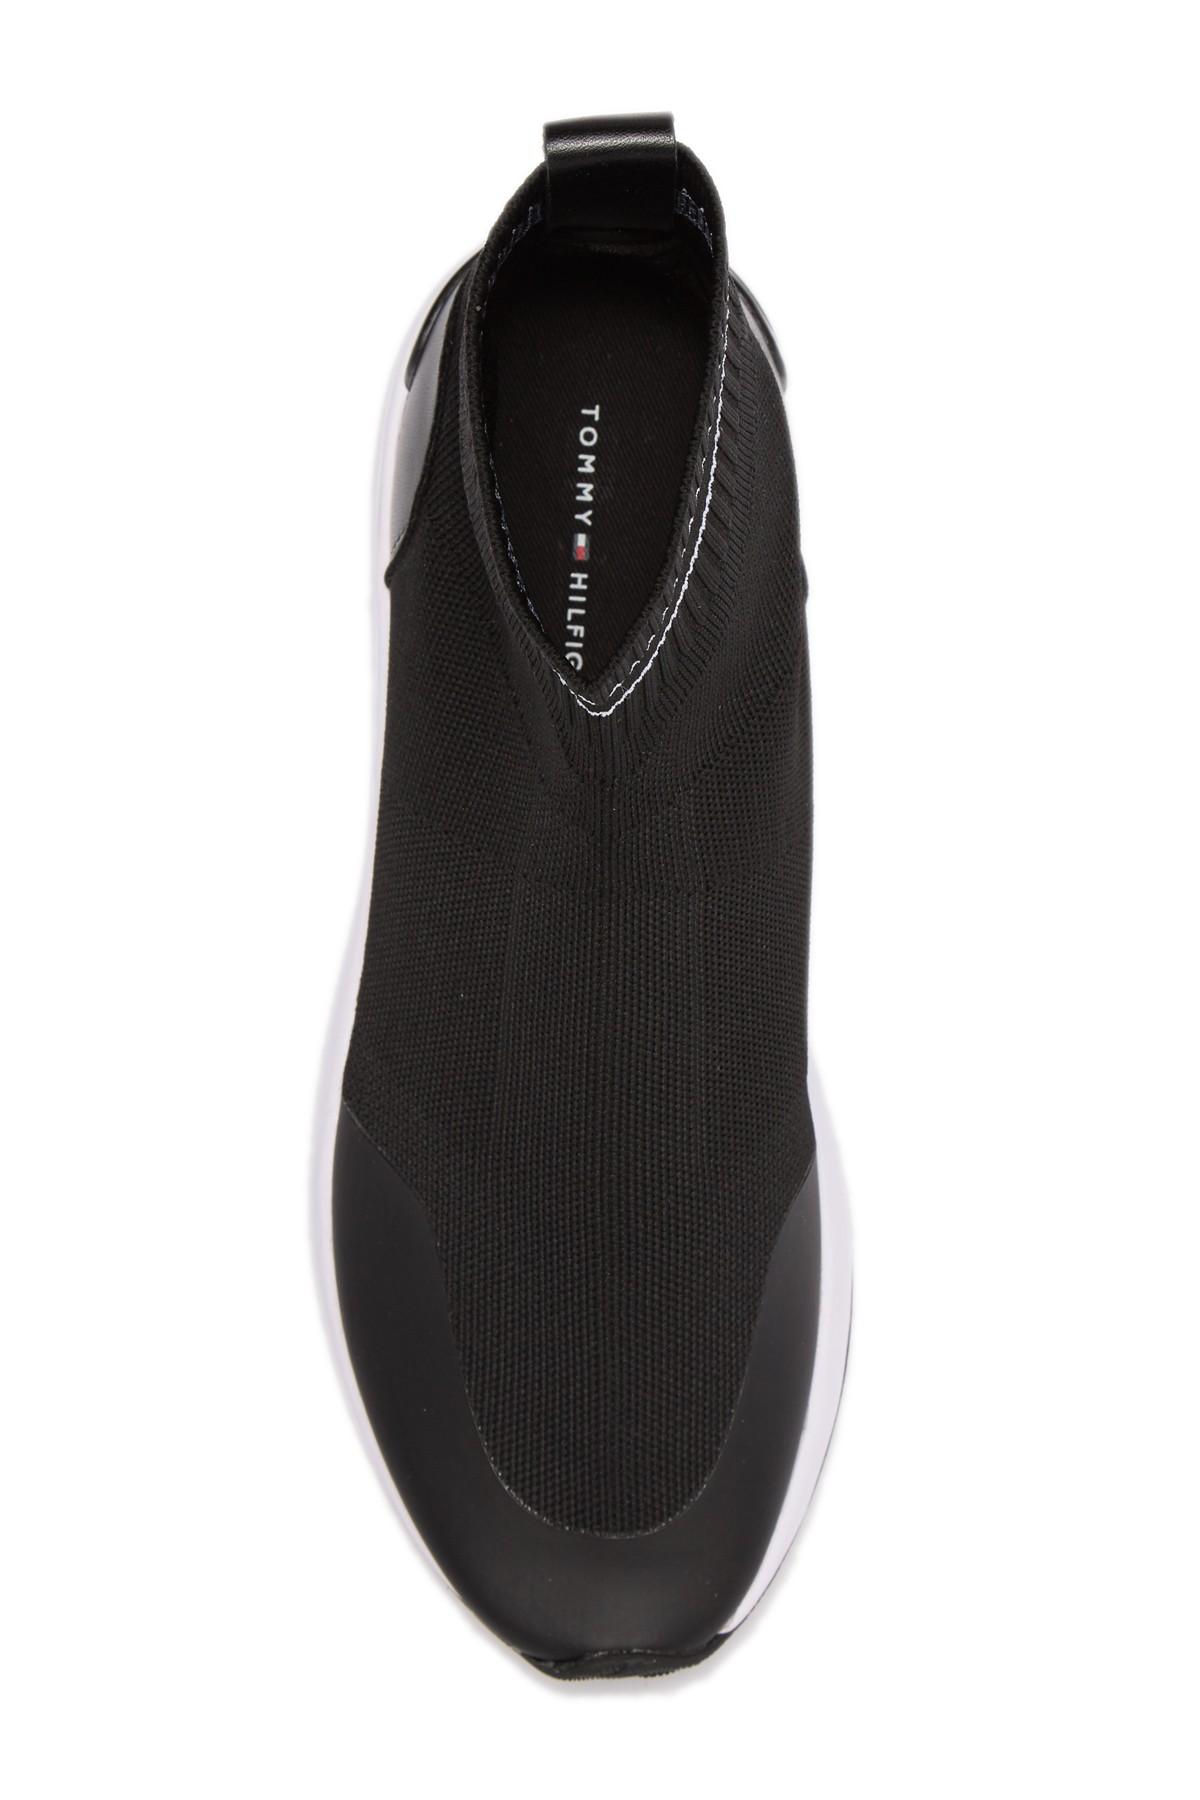 Tommy Hilfiger Reco Sock Sneakers in Black | Lyst